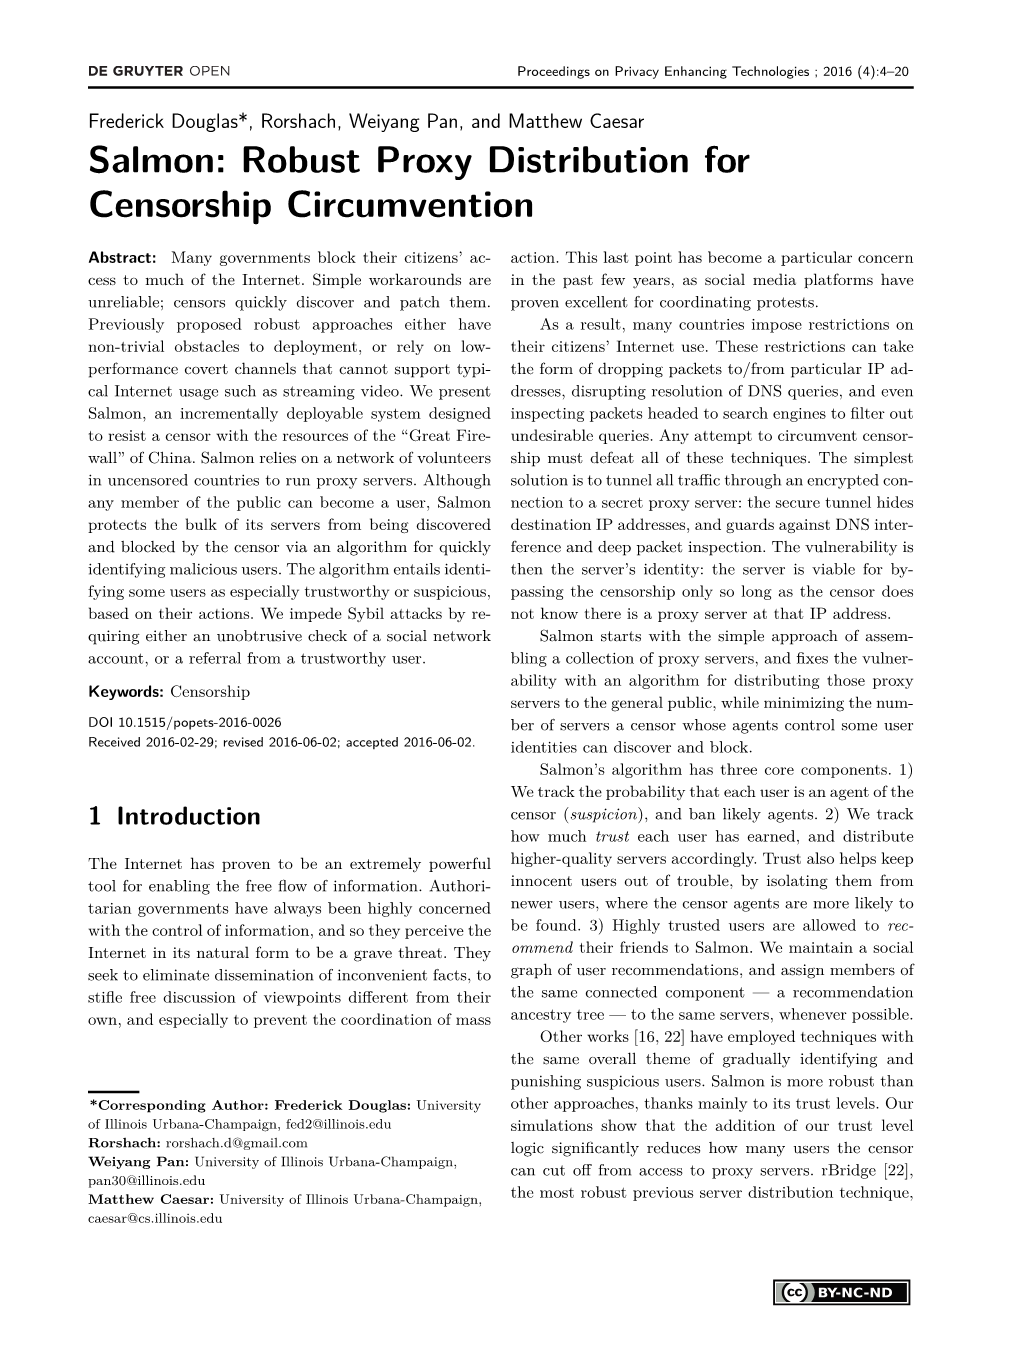 Salmon: Robust Proxy Distribution for Censorship Circumvention